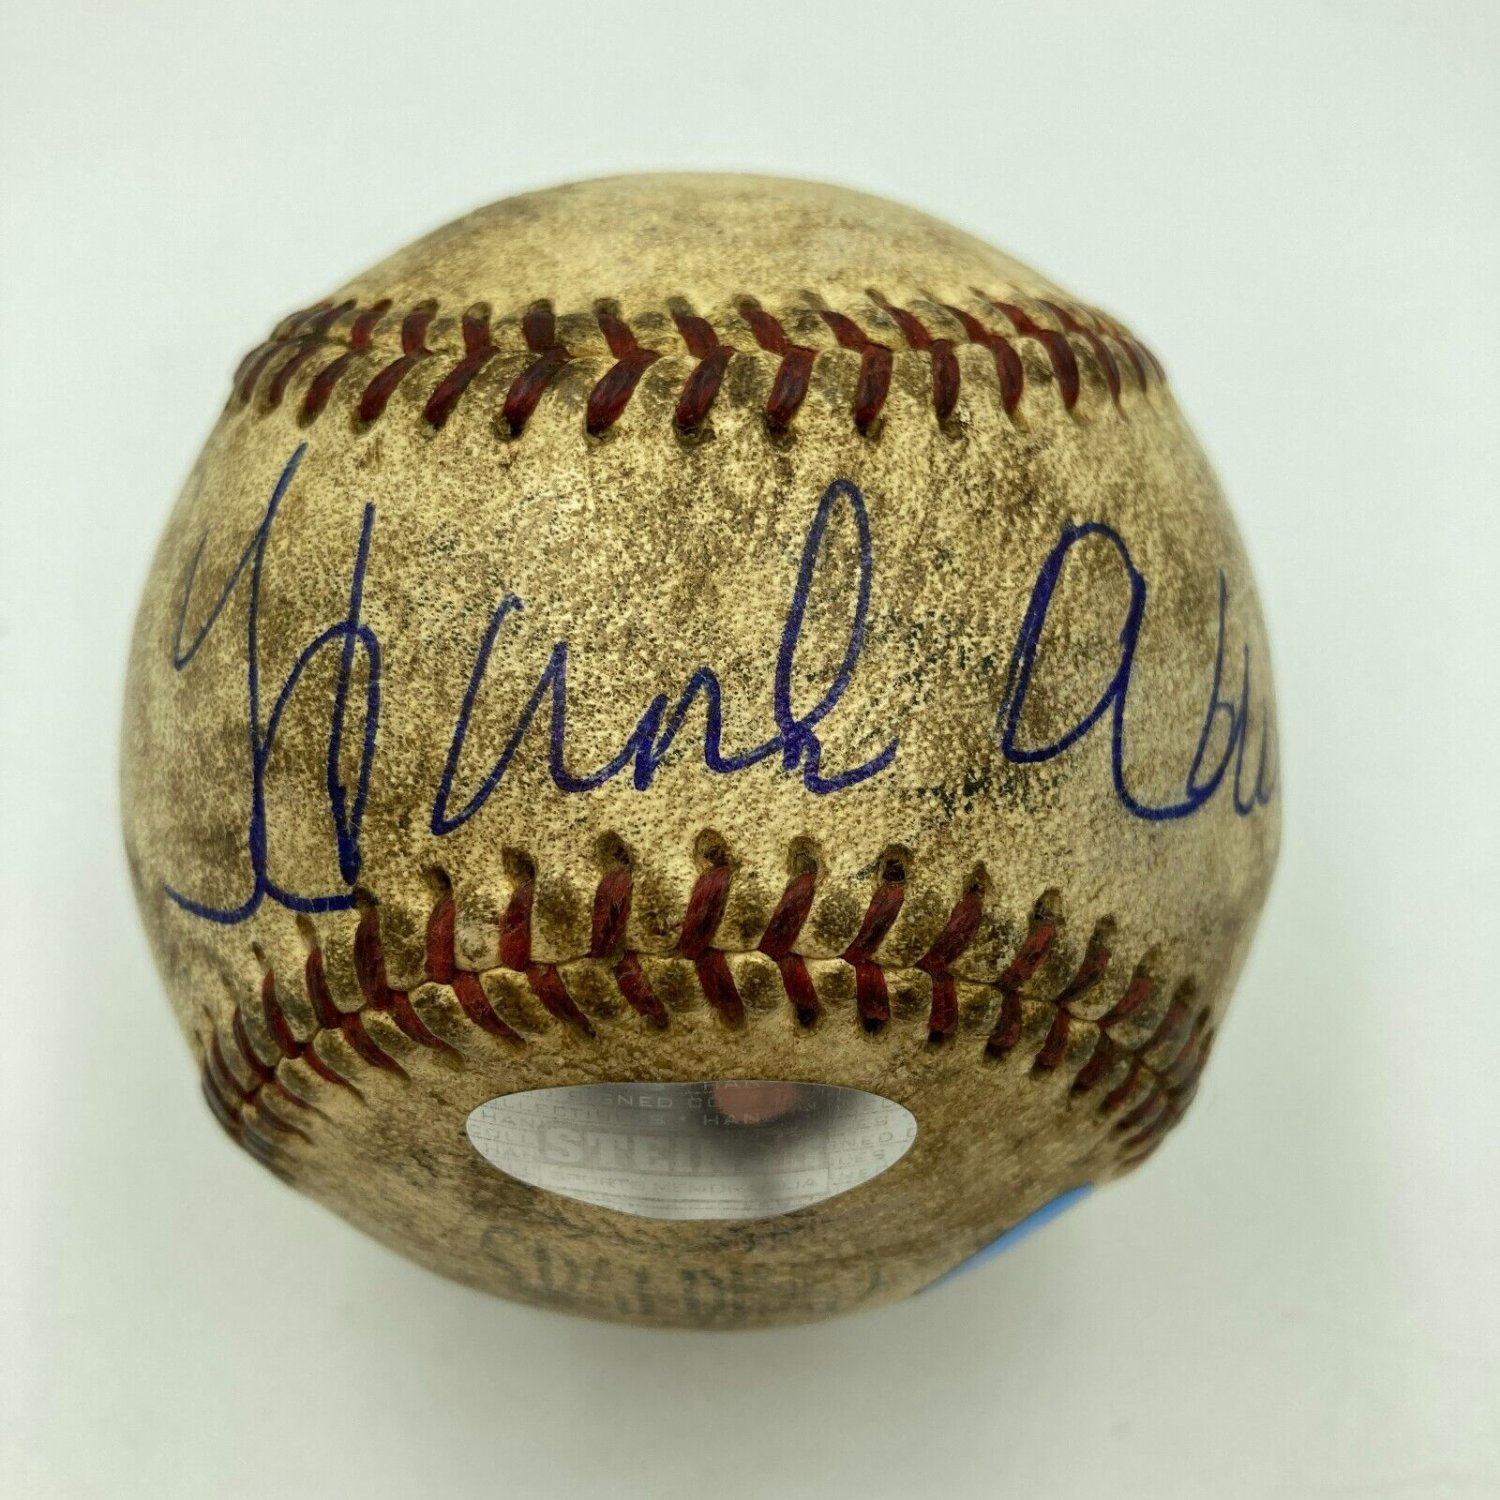 Hank Aaron Autographed Ball - Official National League PSA DNA COA